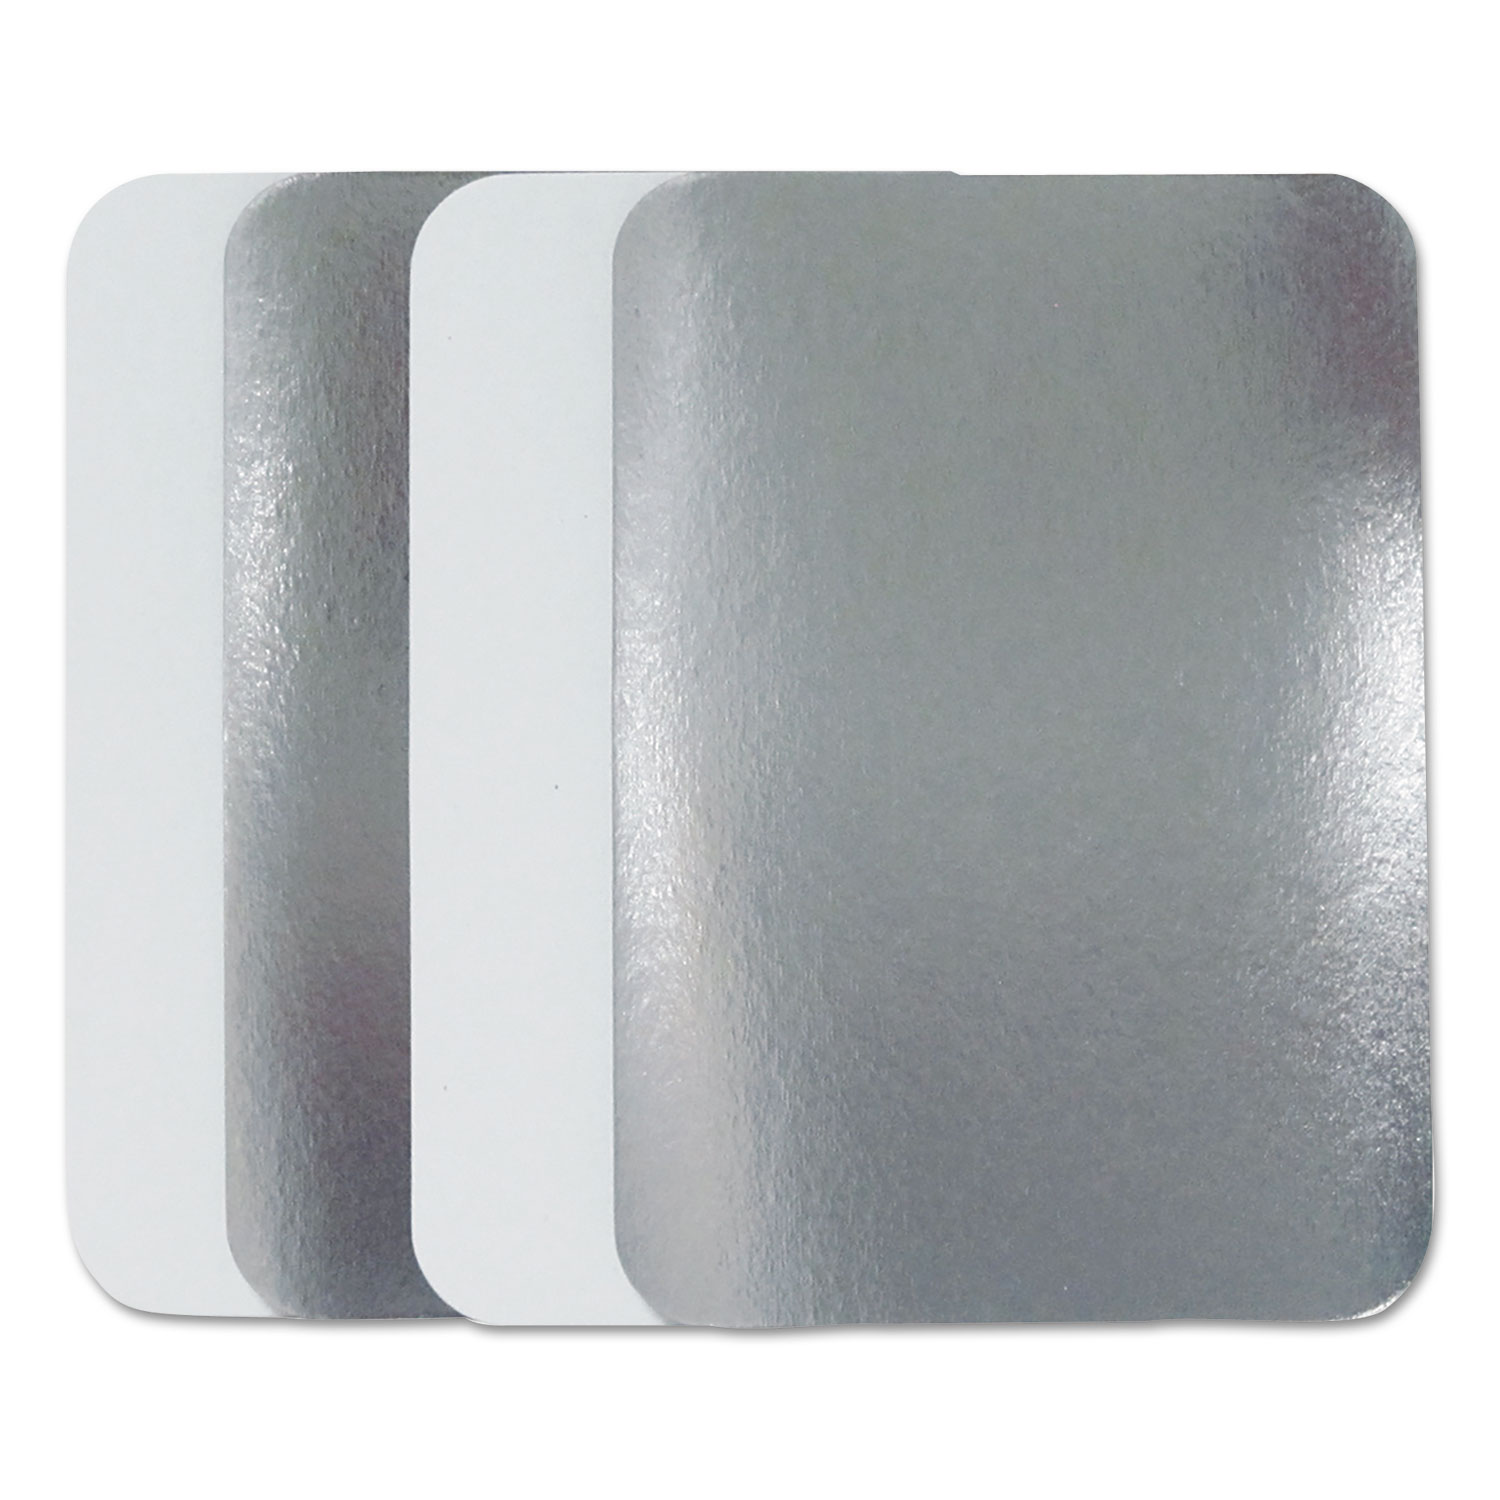 Interfolded Aluminum Foil Sheets, 12 x 10.75, Silver, 500/Box, 6  Boxes/Carton - Zerbee